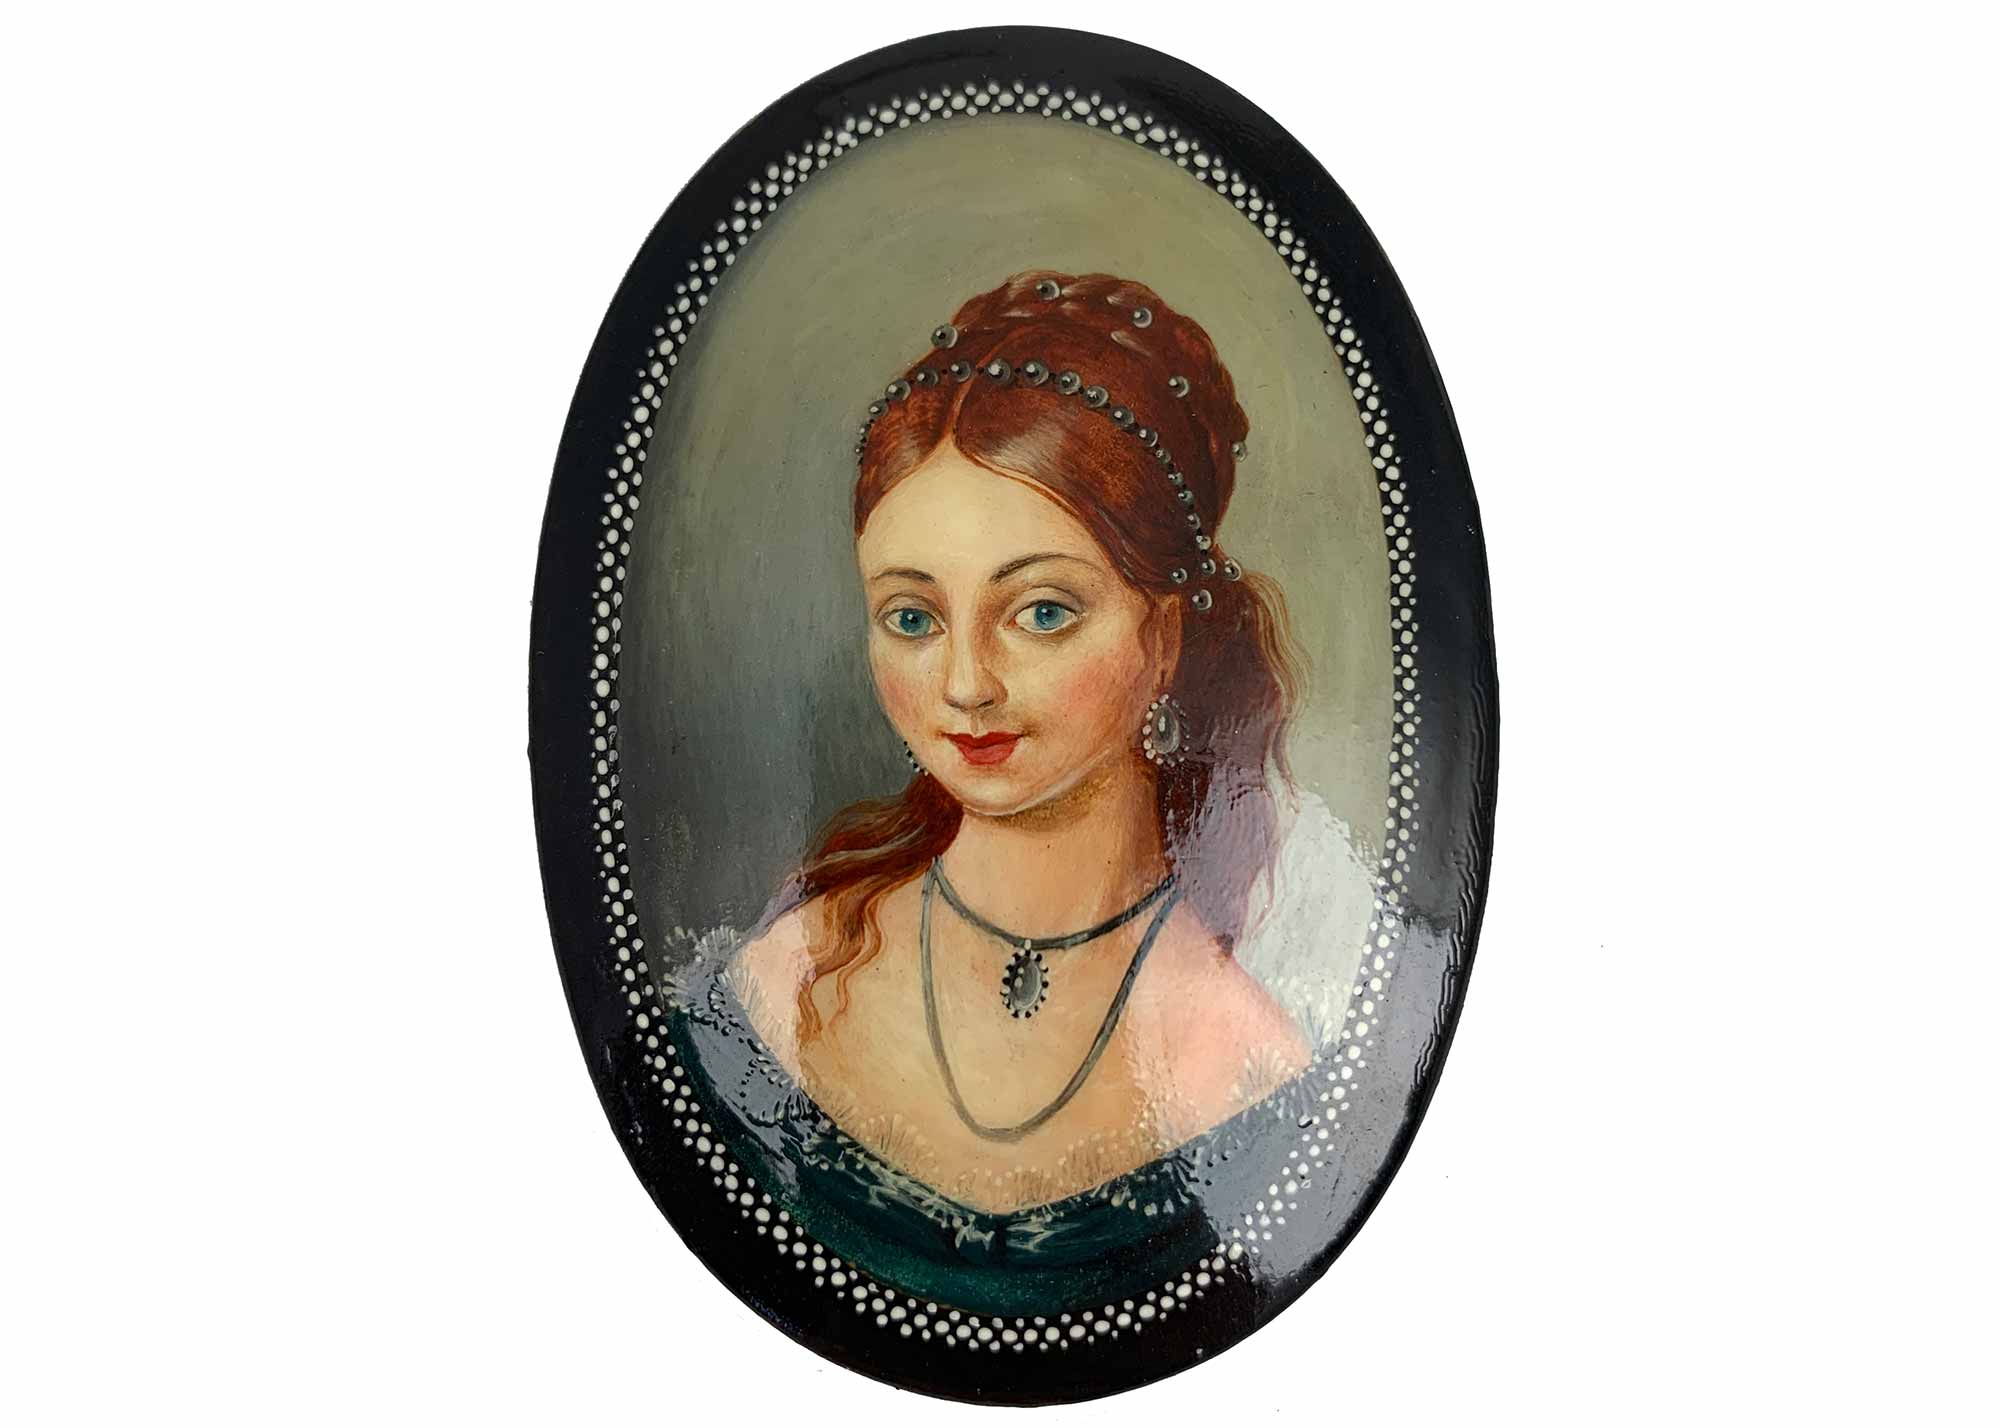 Buy Vintage Mother of Pearl Portrait Brooch at GoldenCockerel.com